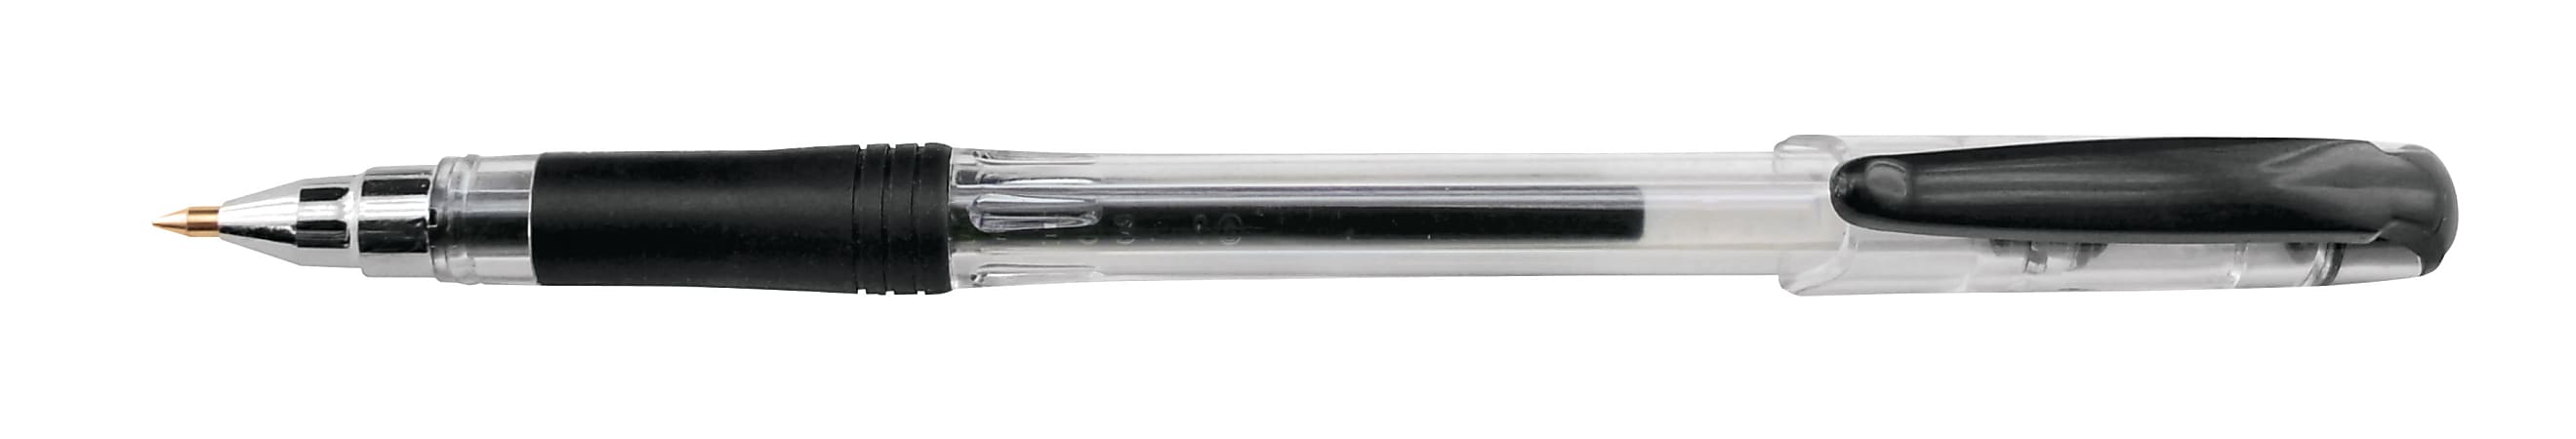 Stride Schneider Gel IT Gel Grip Pens, Medium Point, 0.8 mm, Translucent Barrel, Black Ink, Pack Of 12